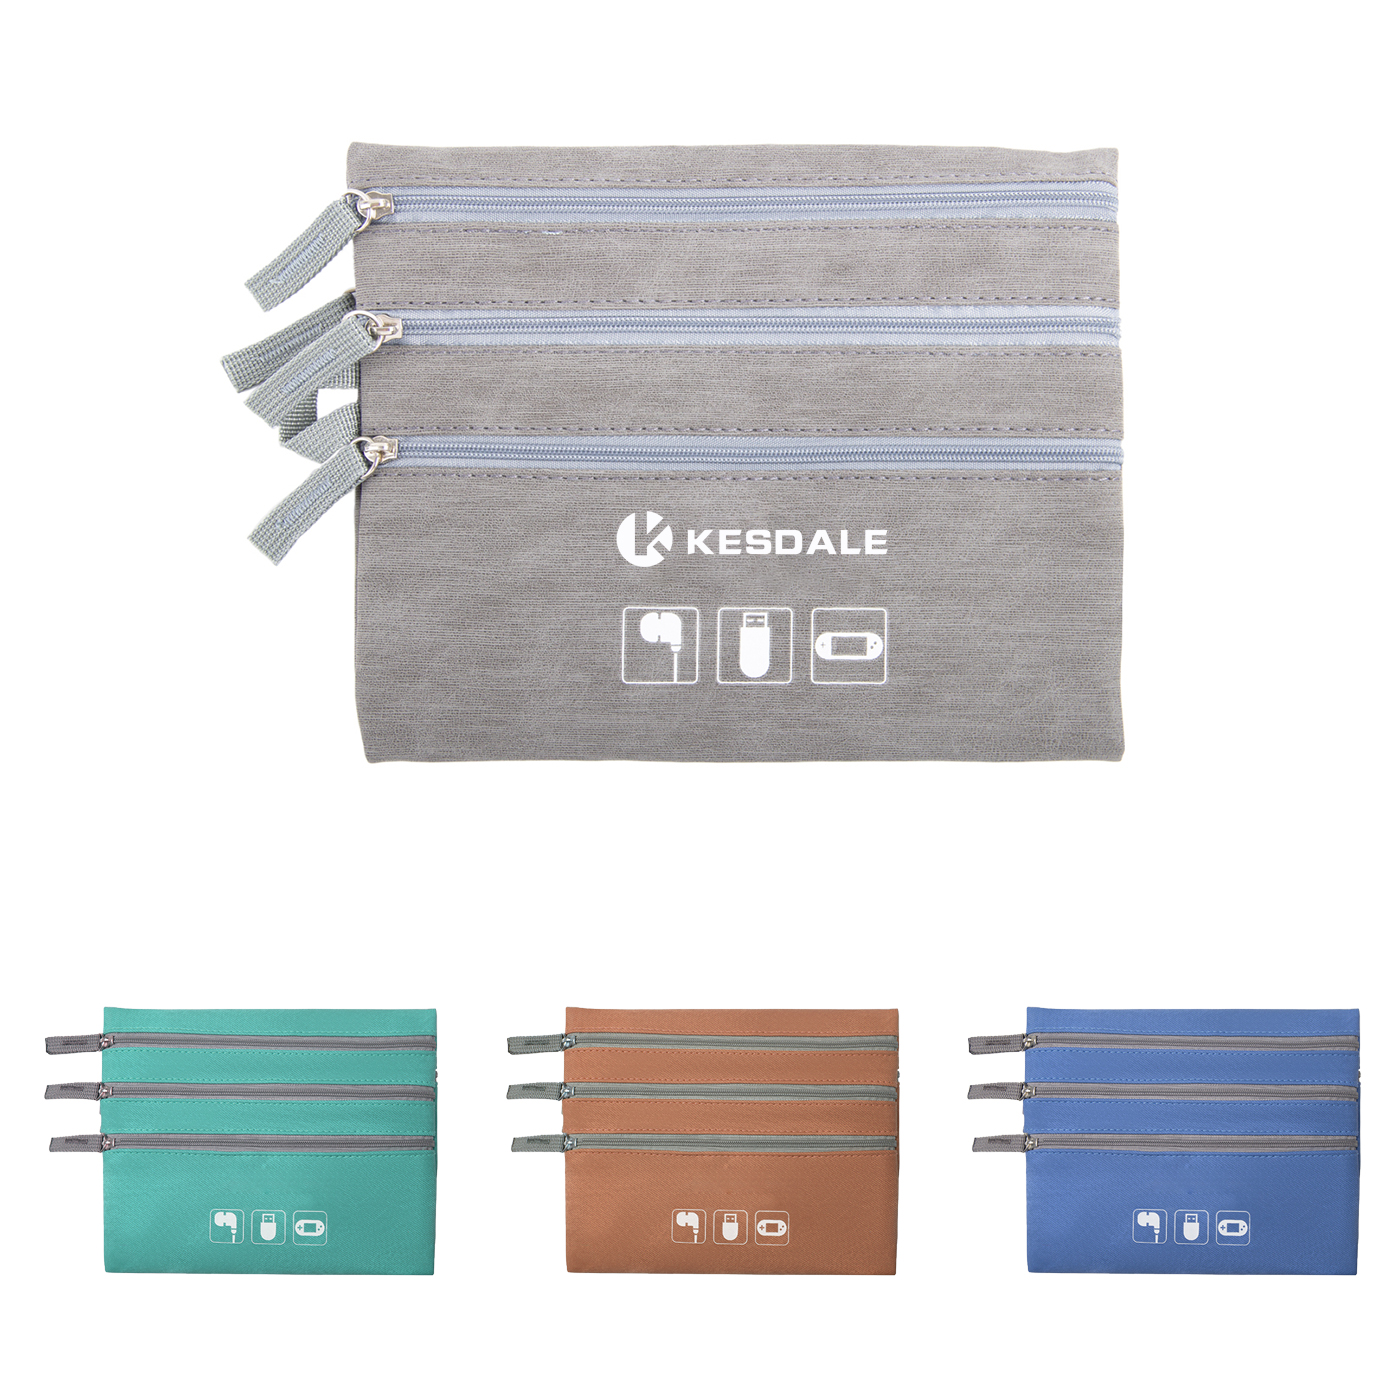 Cable Organizer Storage Bag